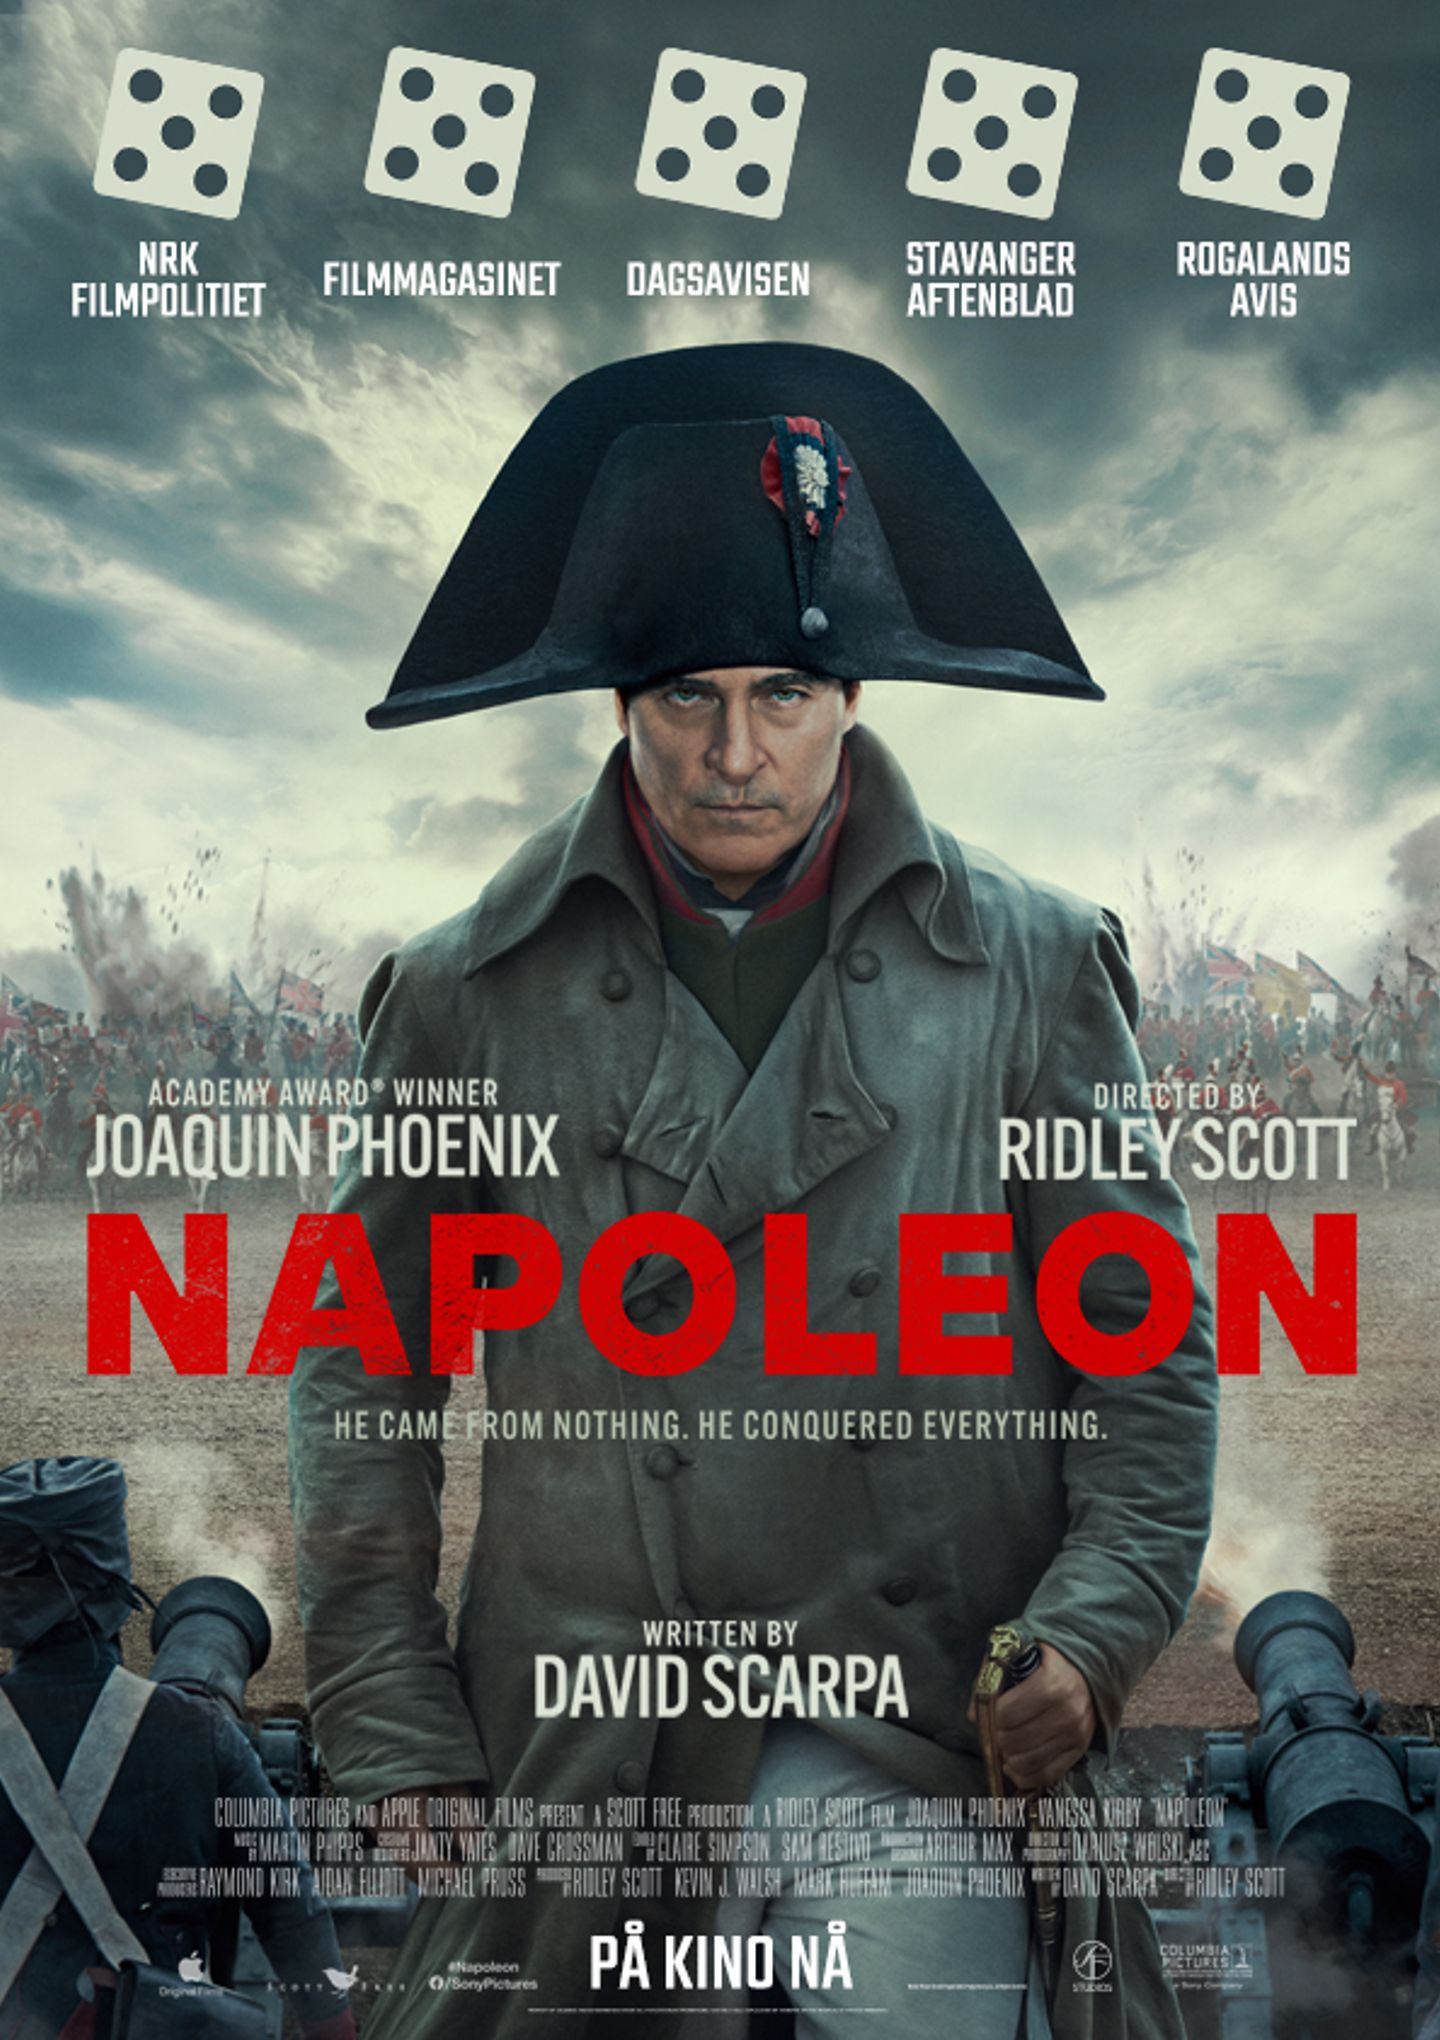 Plakat for 'Napoleon'